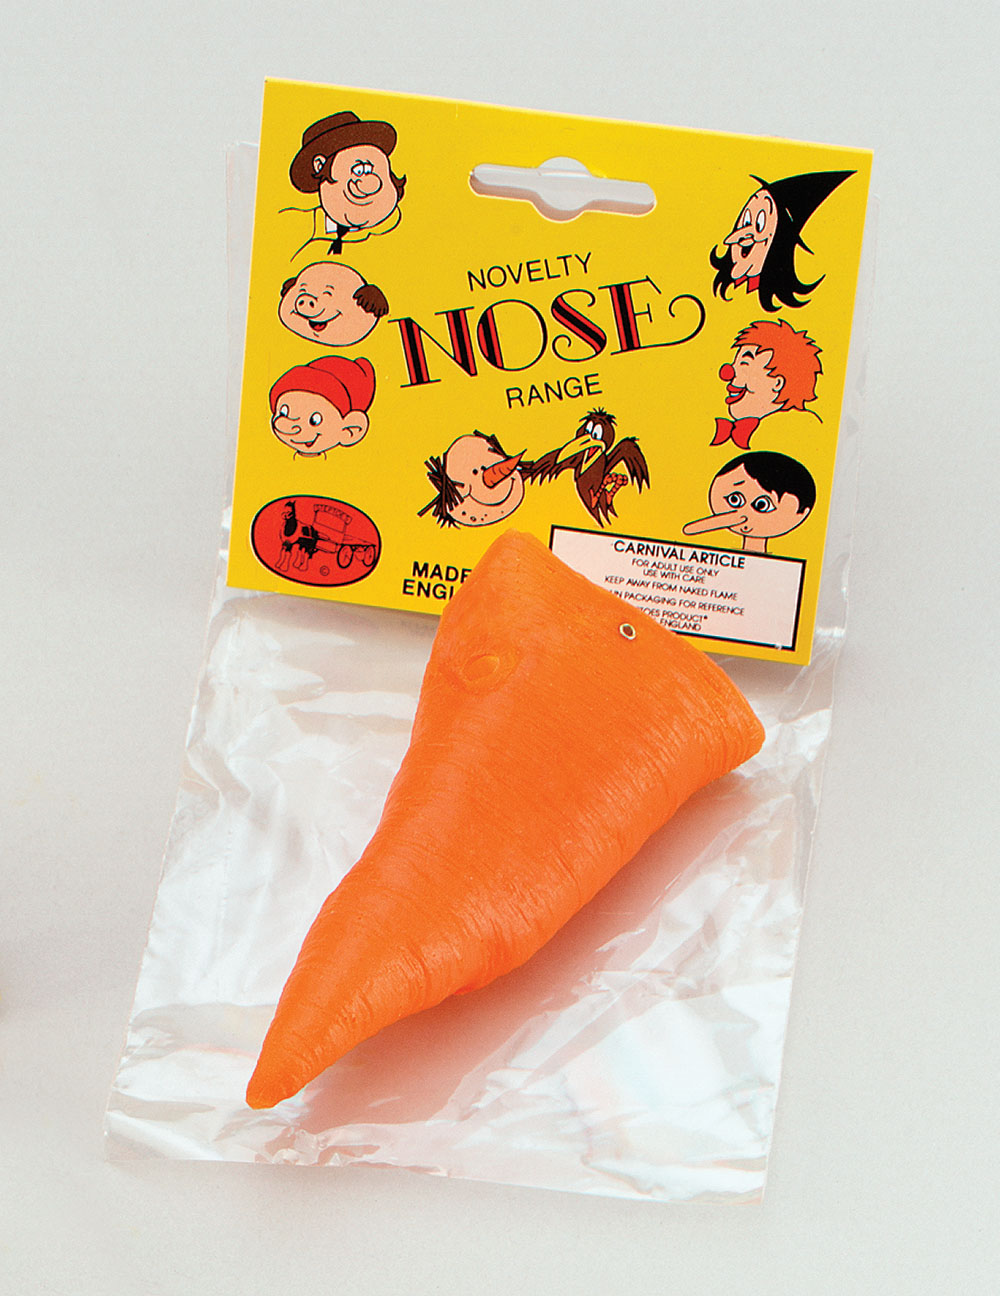 Nose. Carrot Shape